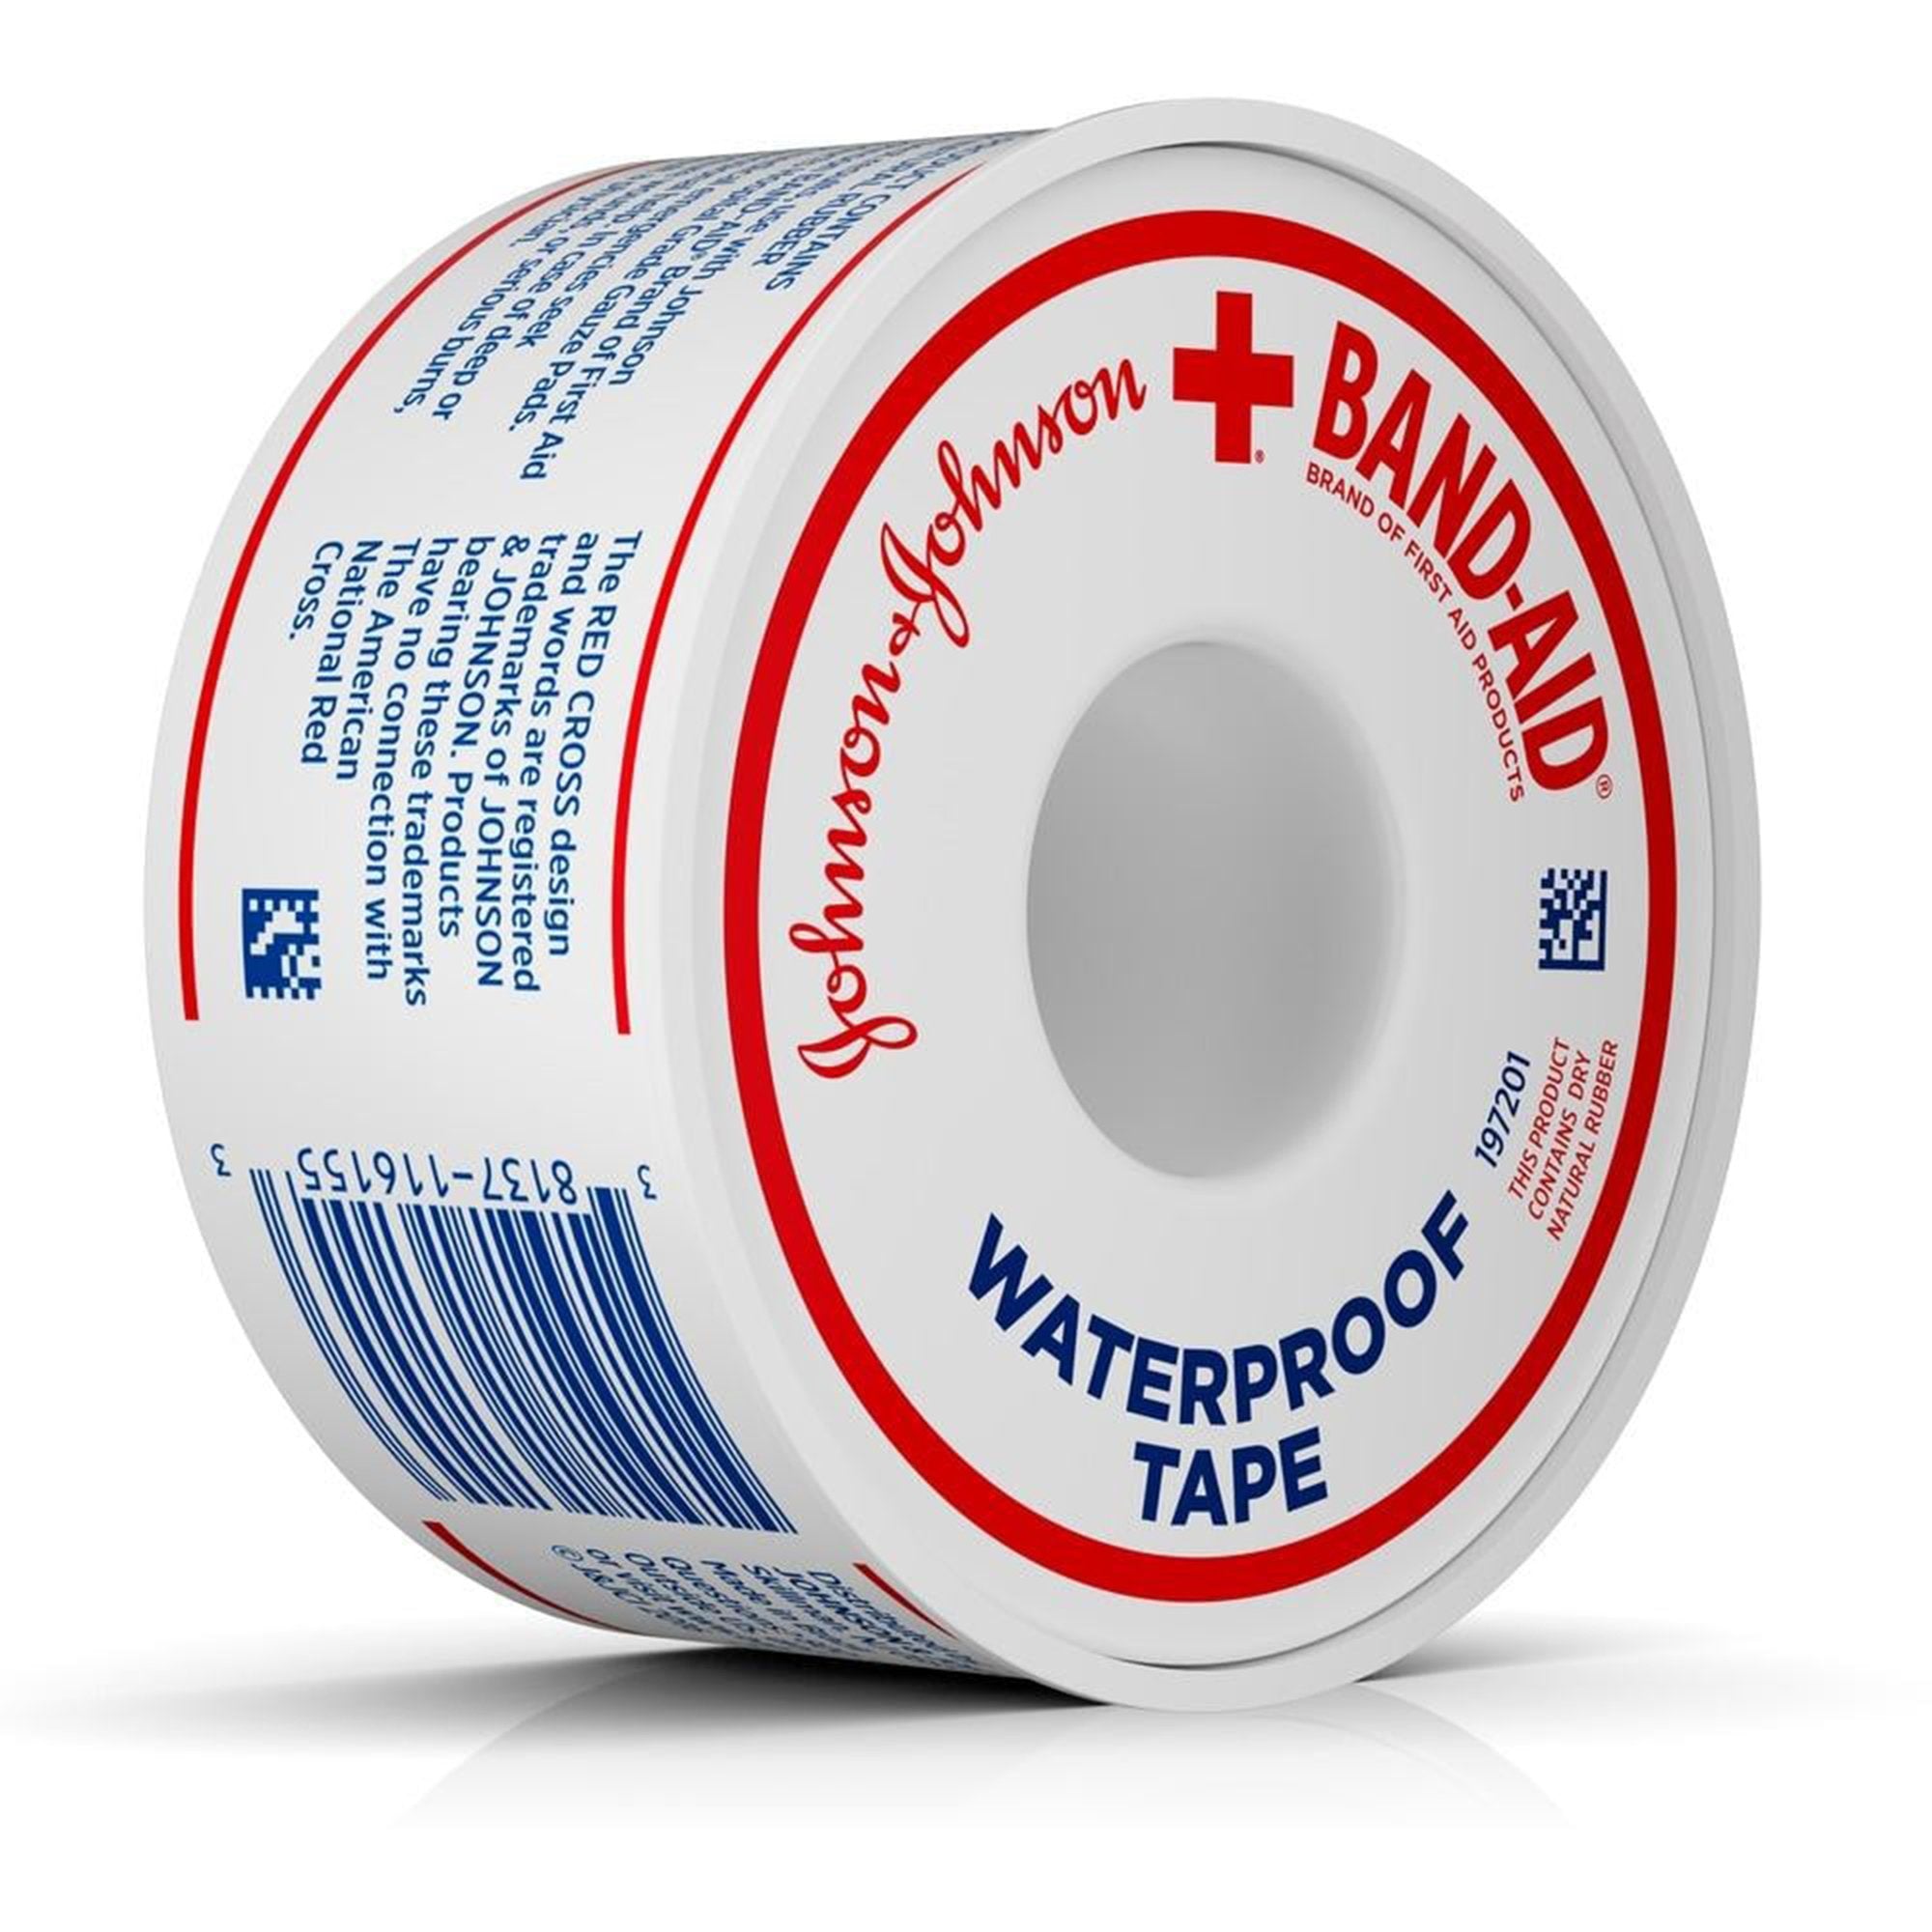 Waterproof Medical Tape Band-Aid® Water Block™ White 1 Inch X 10 Yard Adhesive NonSterile